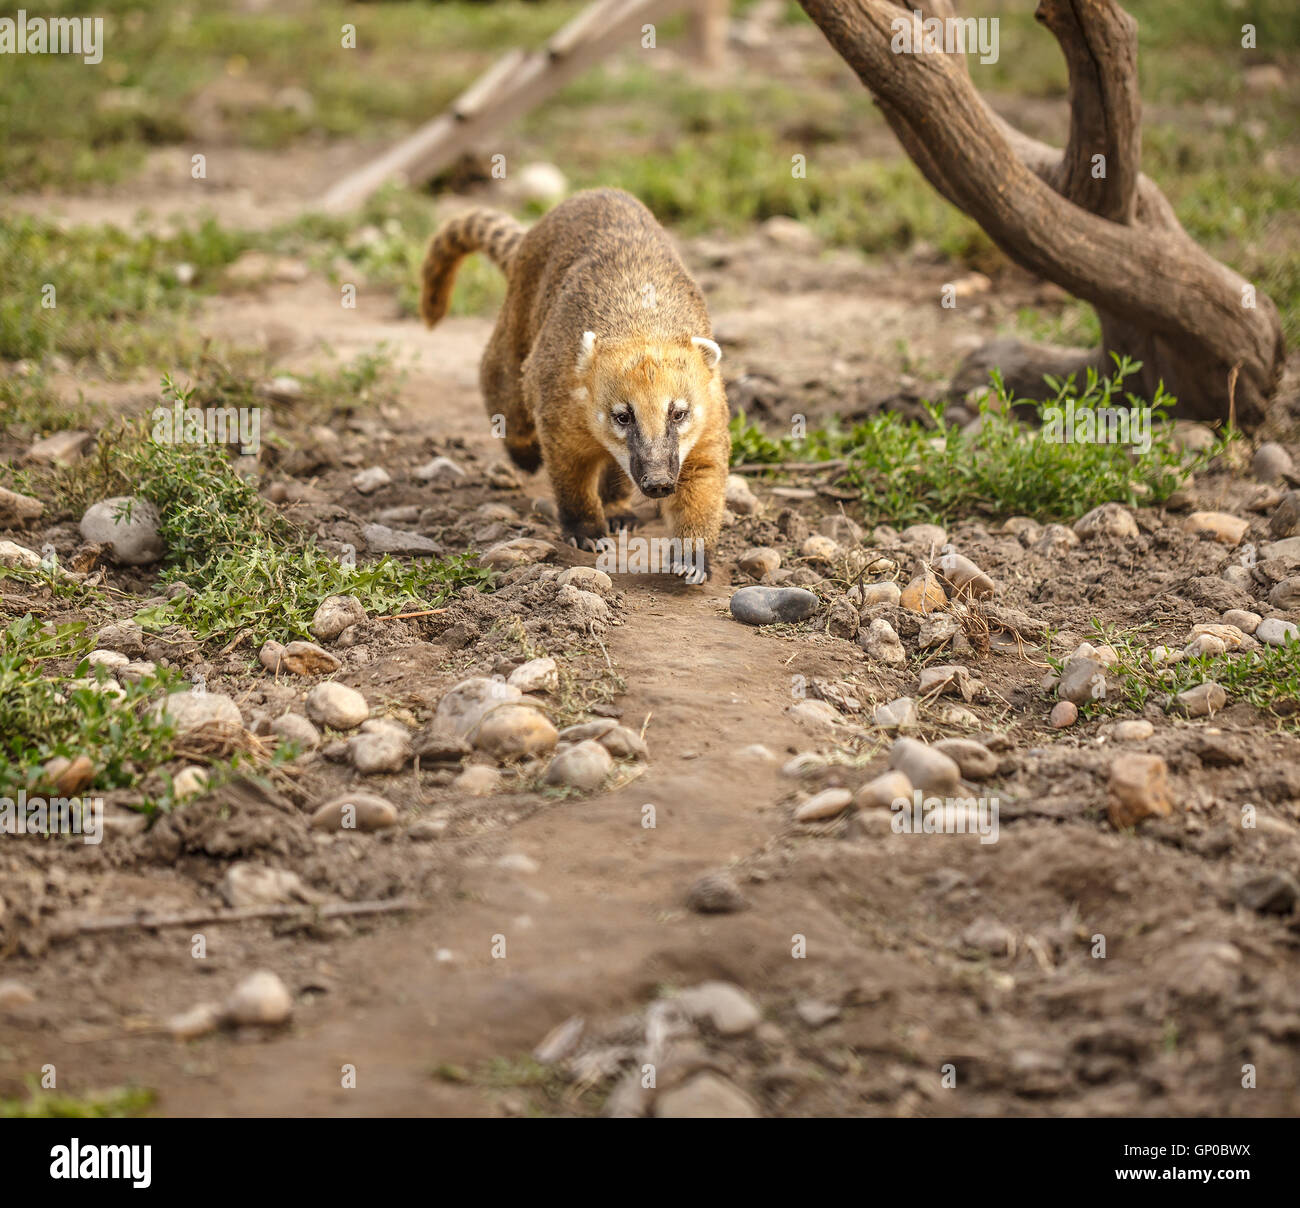 South American coati (Nasua nasua), also known as the ring-tailed coati. Wildlife animal. Stock Photo